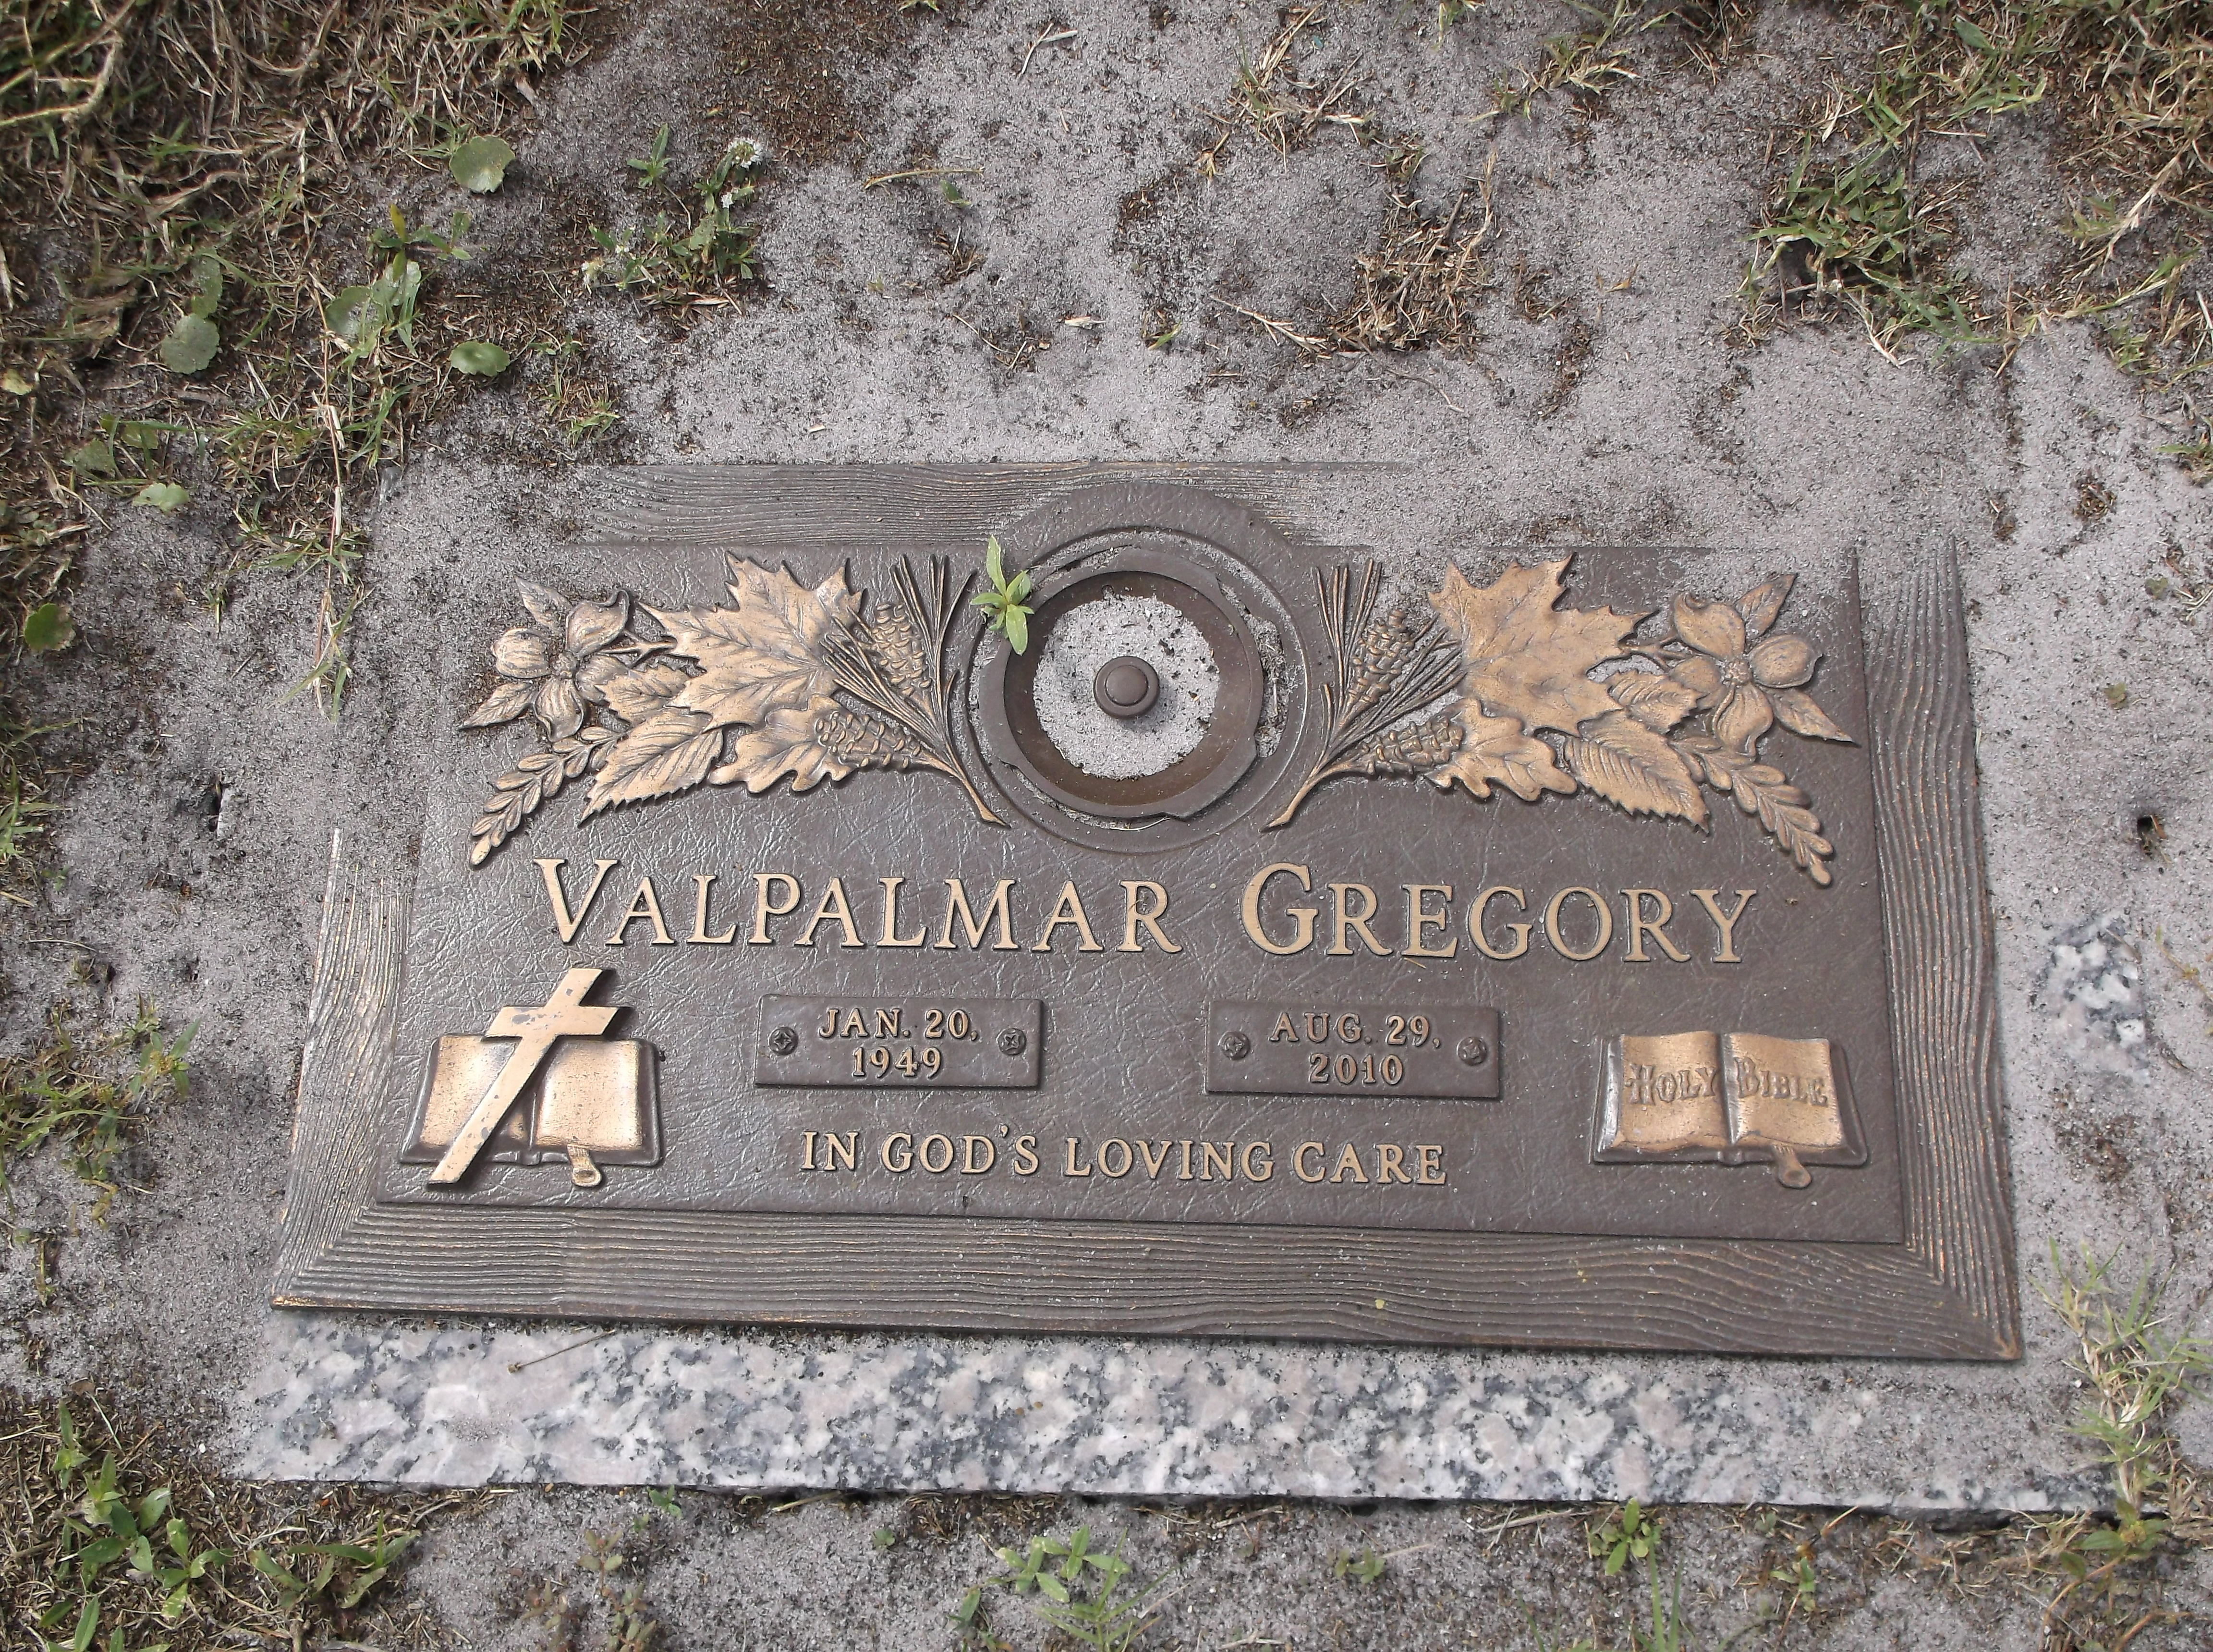 Valpalmar Gregory